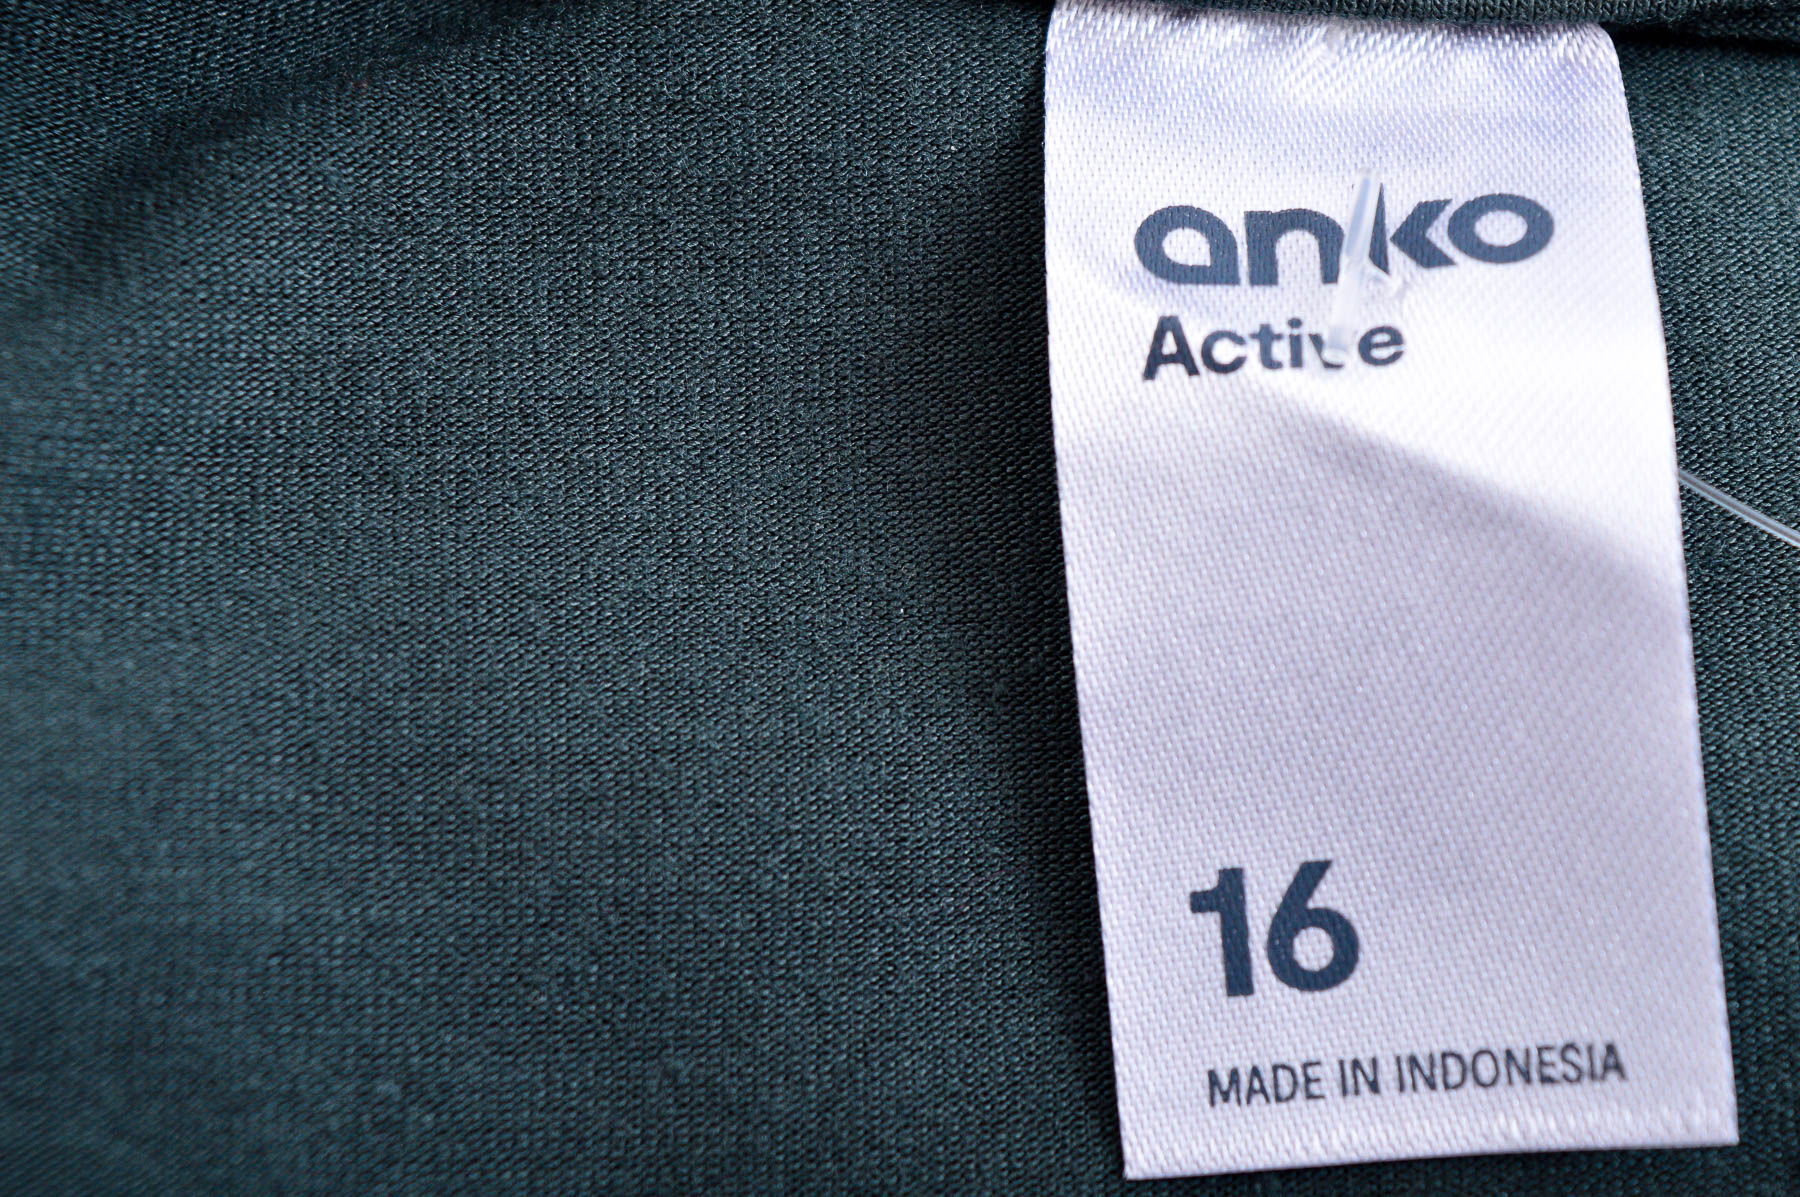 Damski podkoszulek - Anko Active - 2